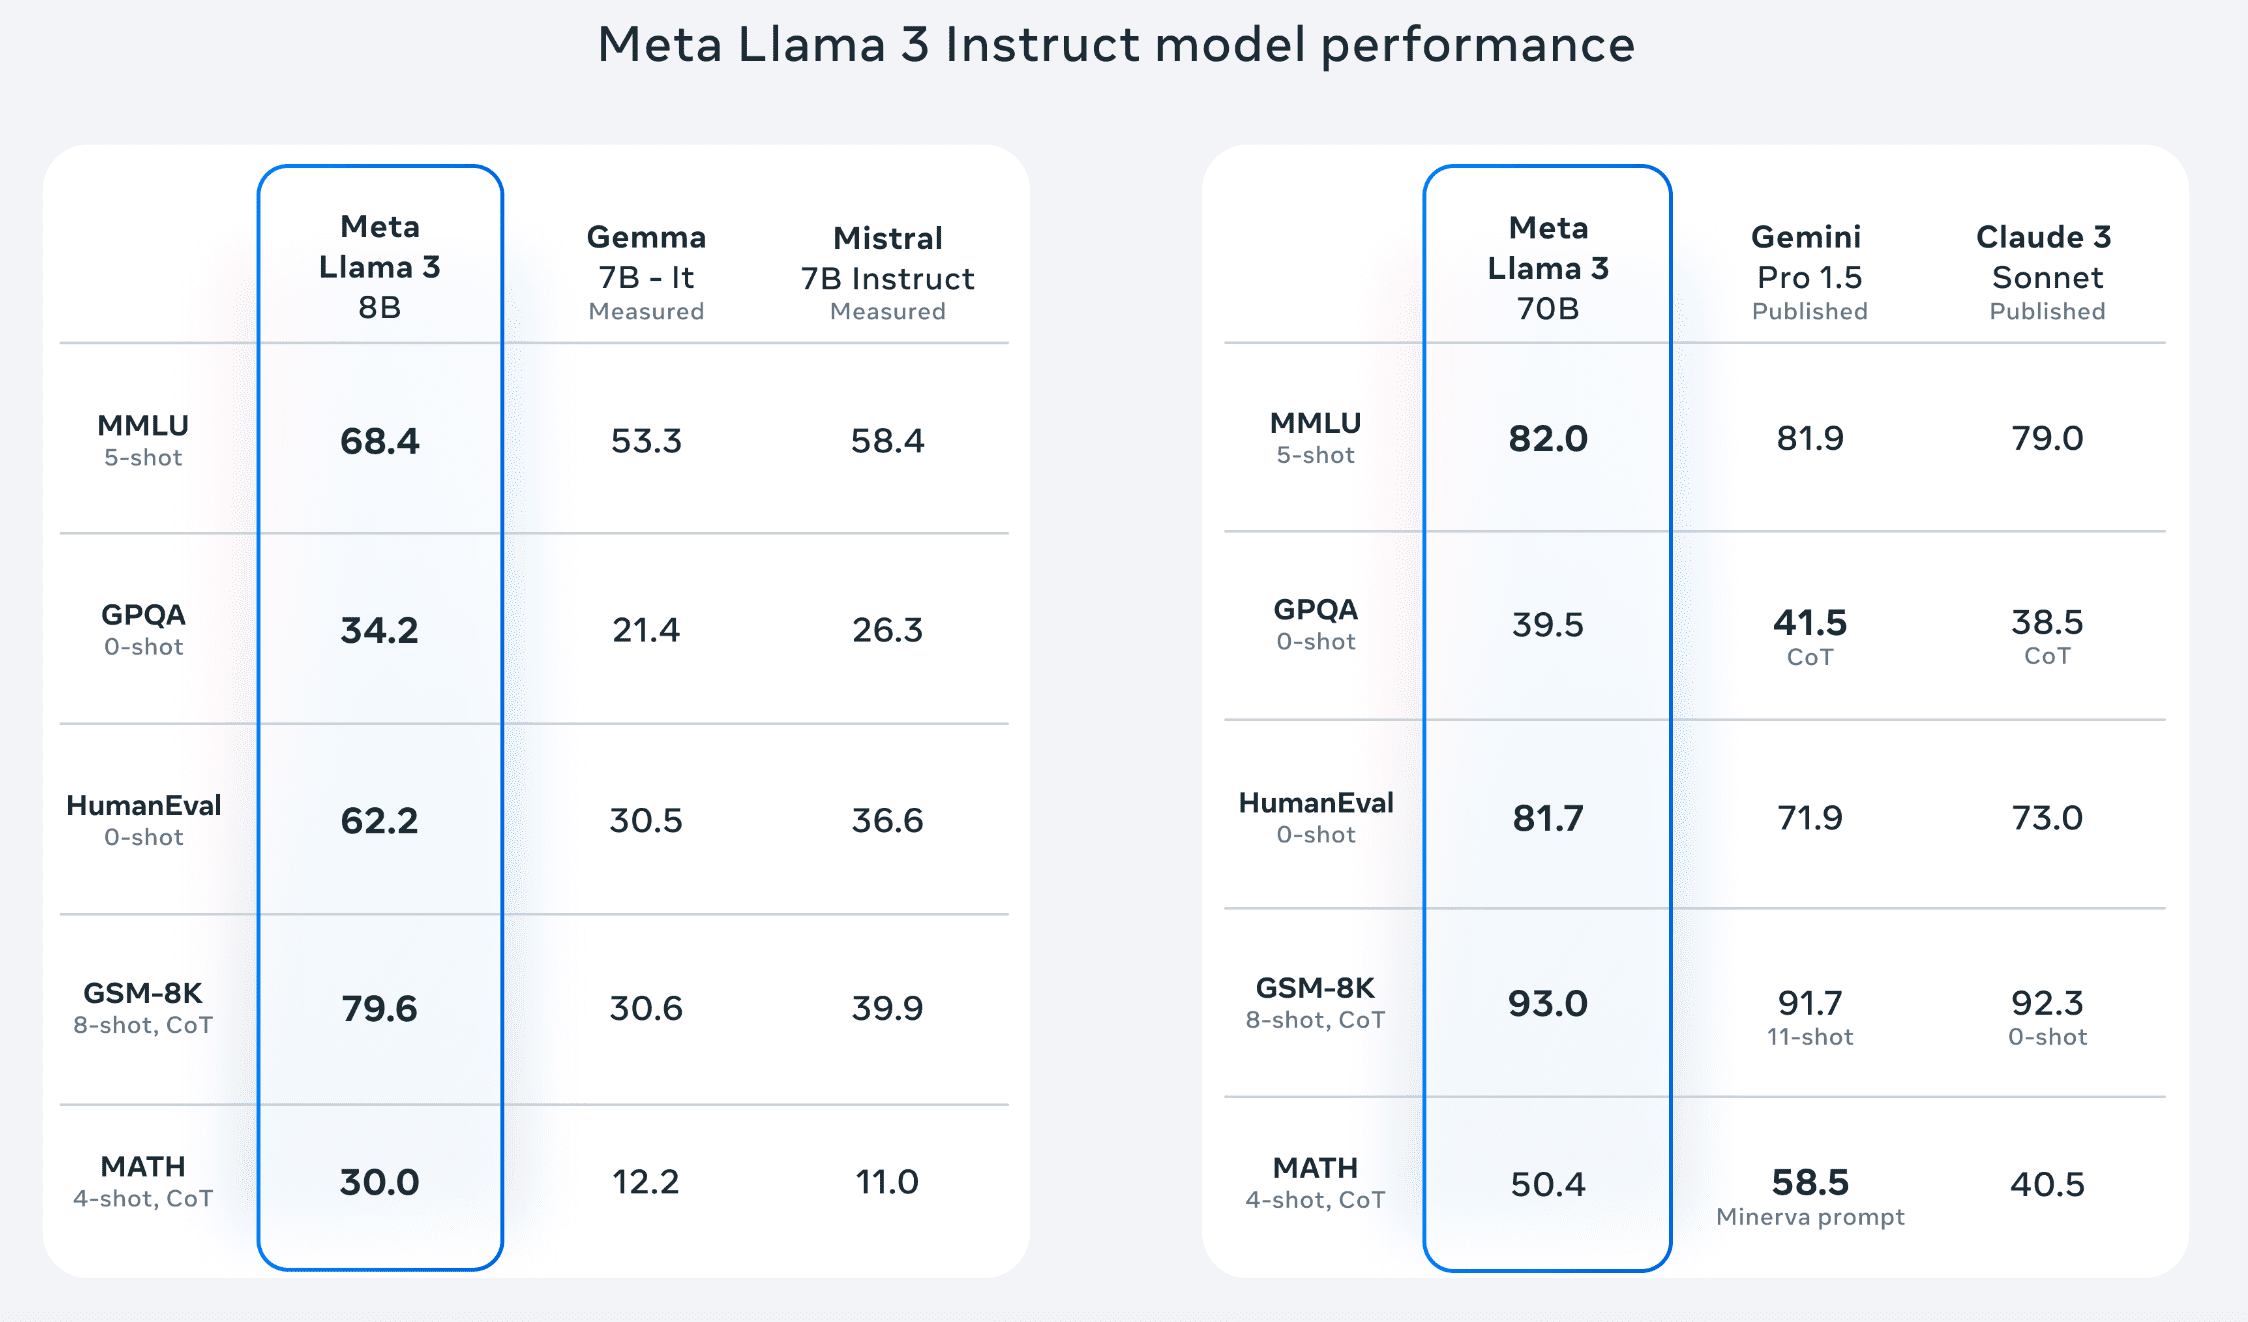 Meta Llama 3's Performance Against Benchmarks